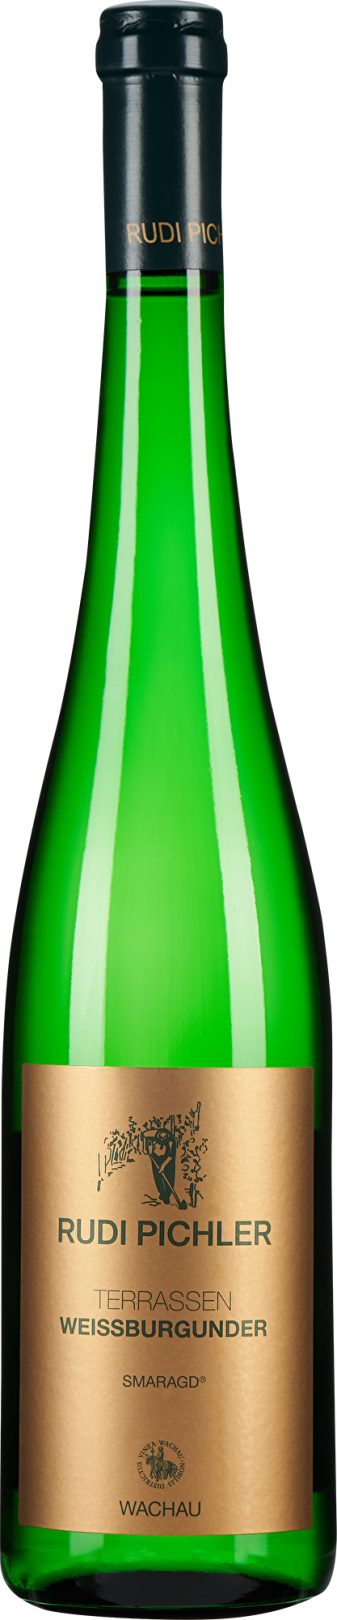 Weissburgunder Terrassen Smaragd